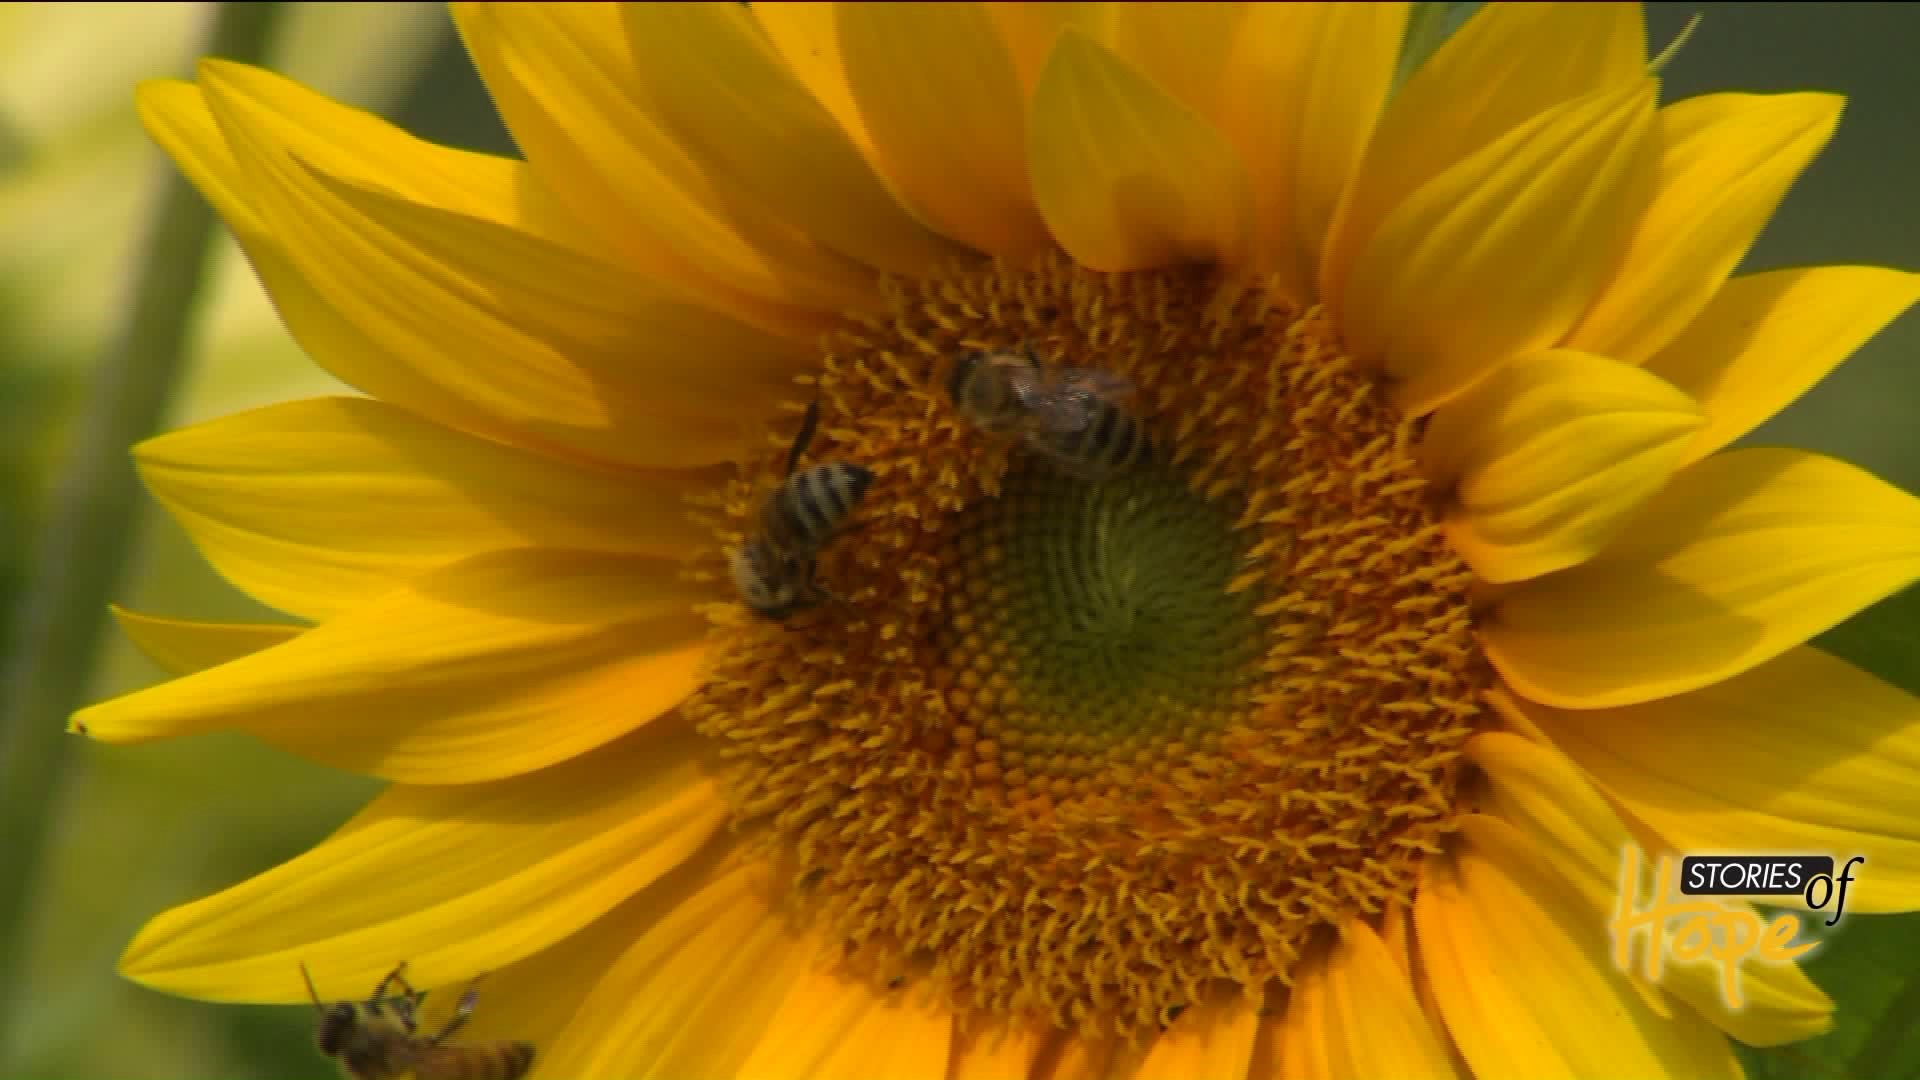 Johnson Memorial Hospital group sells sunflowers as fundraiser